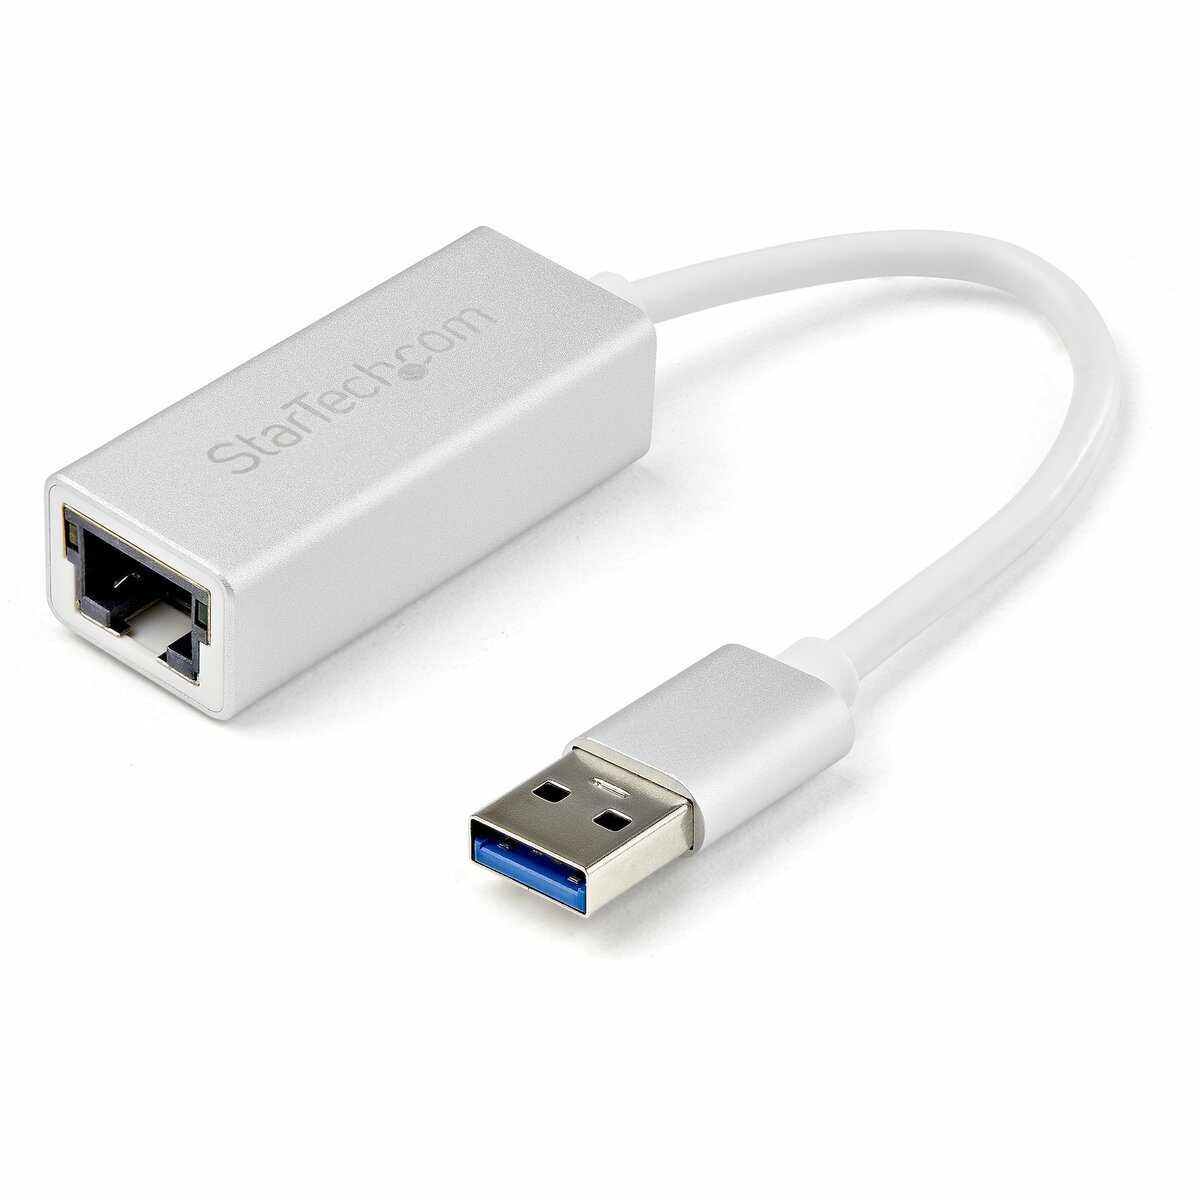 colateral Exclusión Diverso StarTech.com USB 3.0 to Gigabit Network Adapter - Silver - Sleek Aluminum  Design for MacBook, Chromebook or Tablet - Native Driver Support  (USB31000SA) - network adapter - USB 3.0 - Gigabit Ethernet x 1